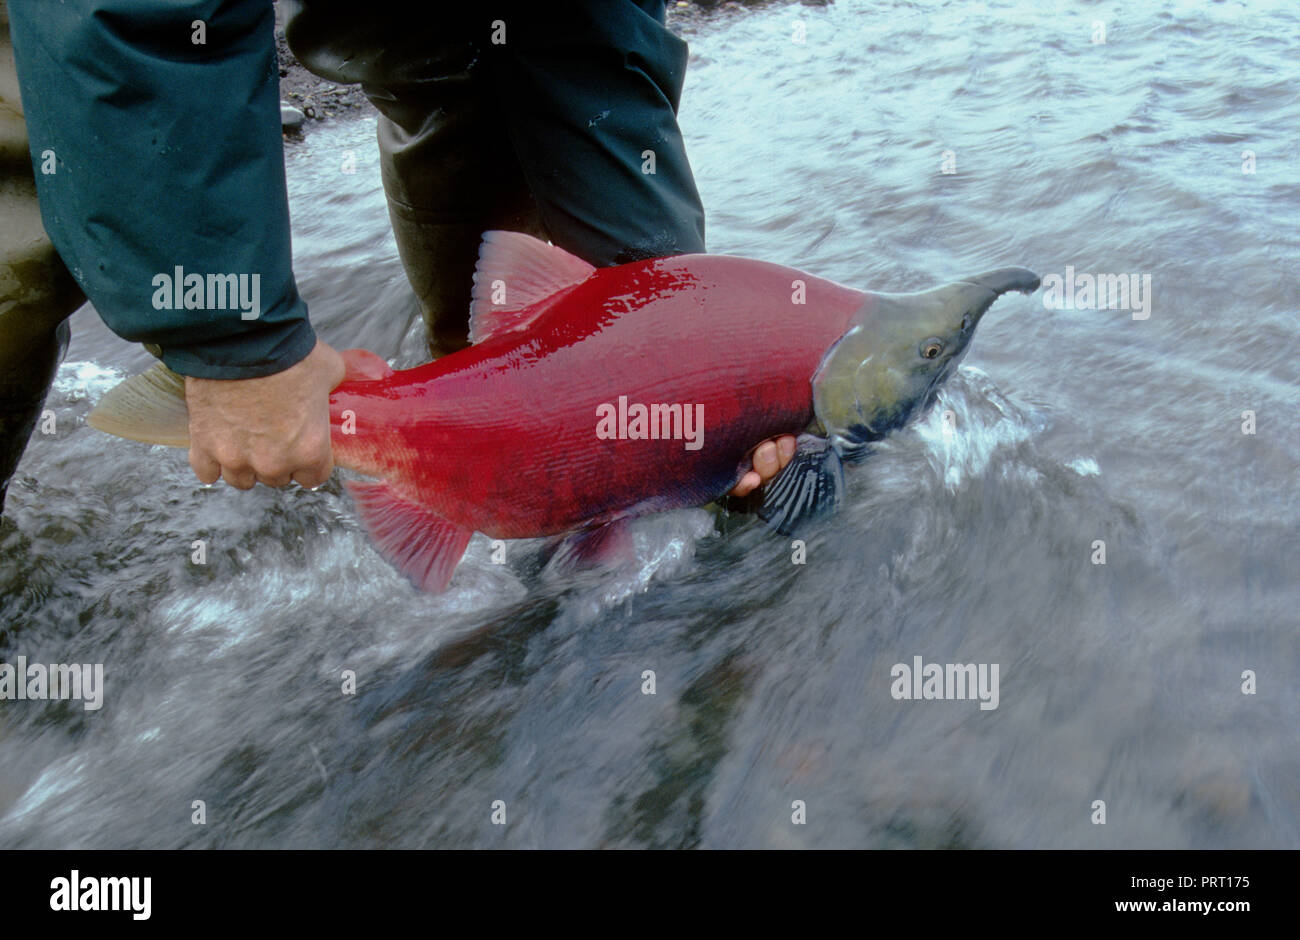 La libération d'une femme pêcheur saumon sockeye (Oncorhynchus nerka) dans la région de Bear Creek au-dessus du lac Becharof Becharof, National Wildlife Refuge, en Alaska Banque D'Images